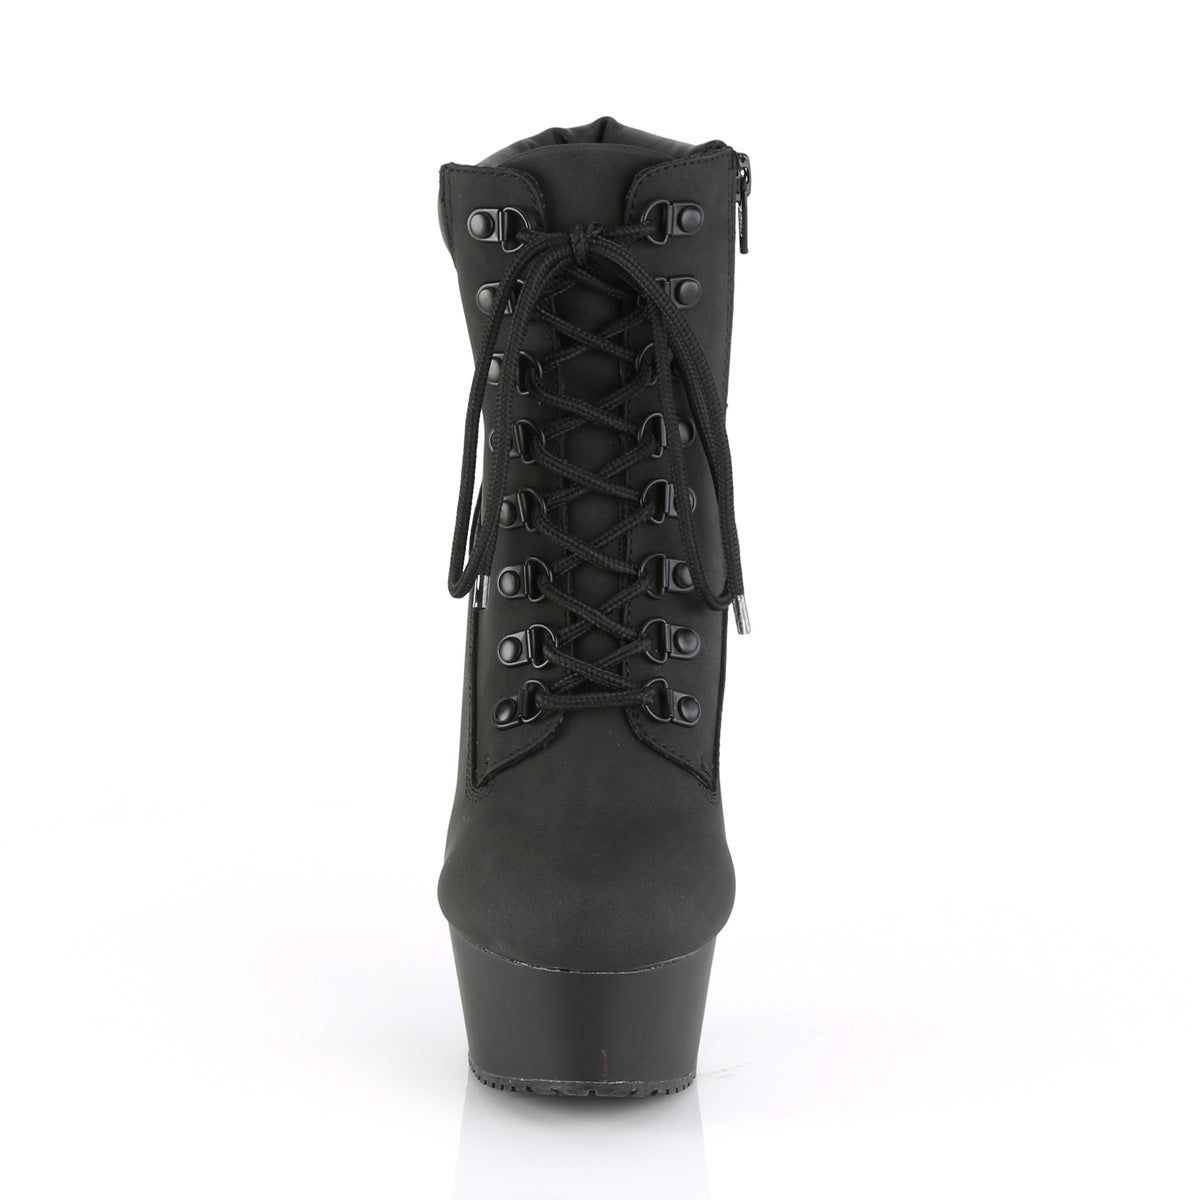 DELIGHT-600TL-02 6" Heel Black Nubuck Pole Dancing Platforms-Pleaser- Sexy Shoes Alternative Footwear